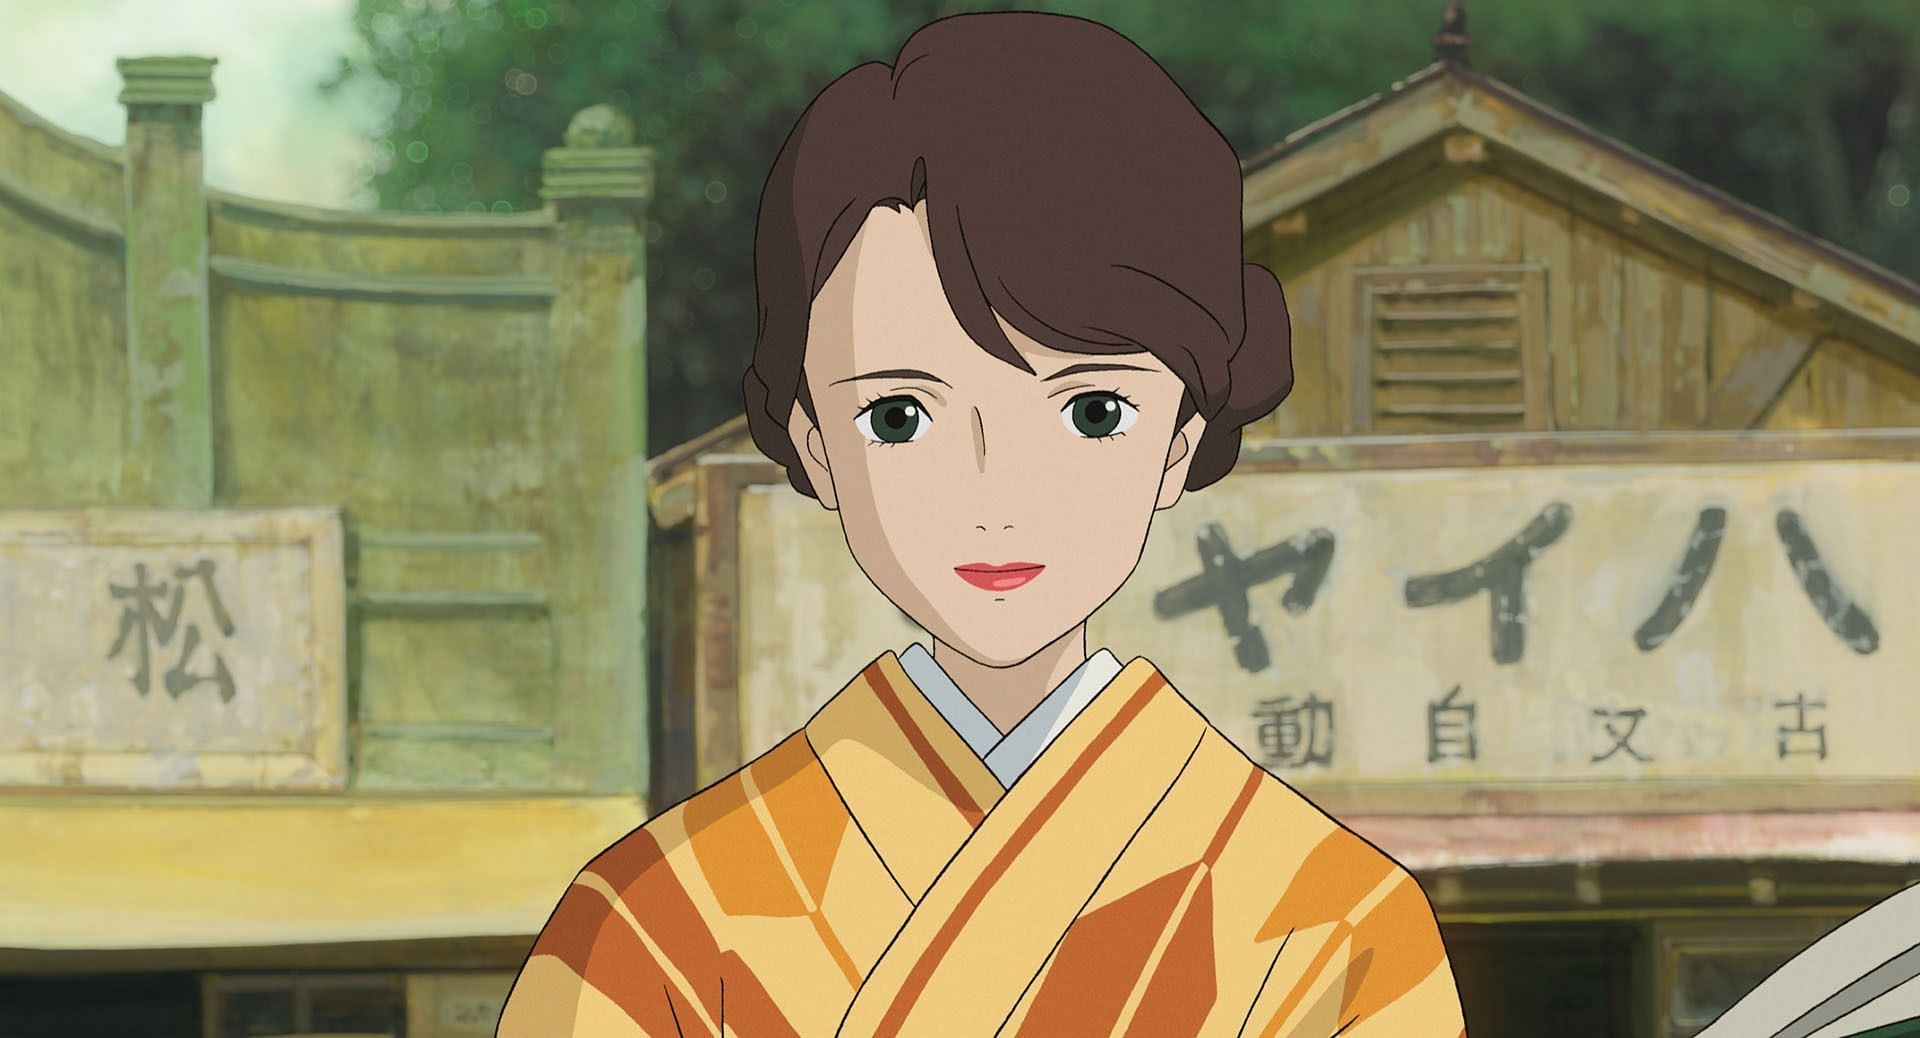 Natsuko as seen in the anime movie (Image via Studio Ghibli)